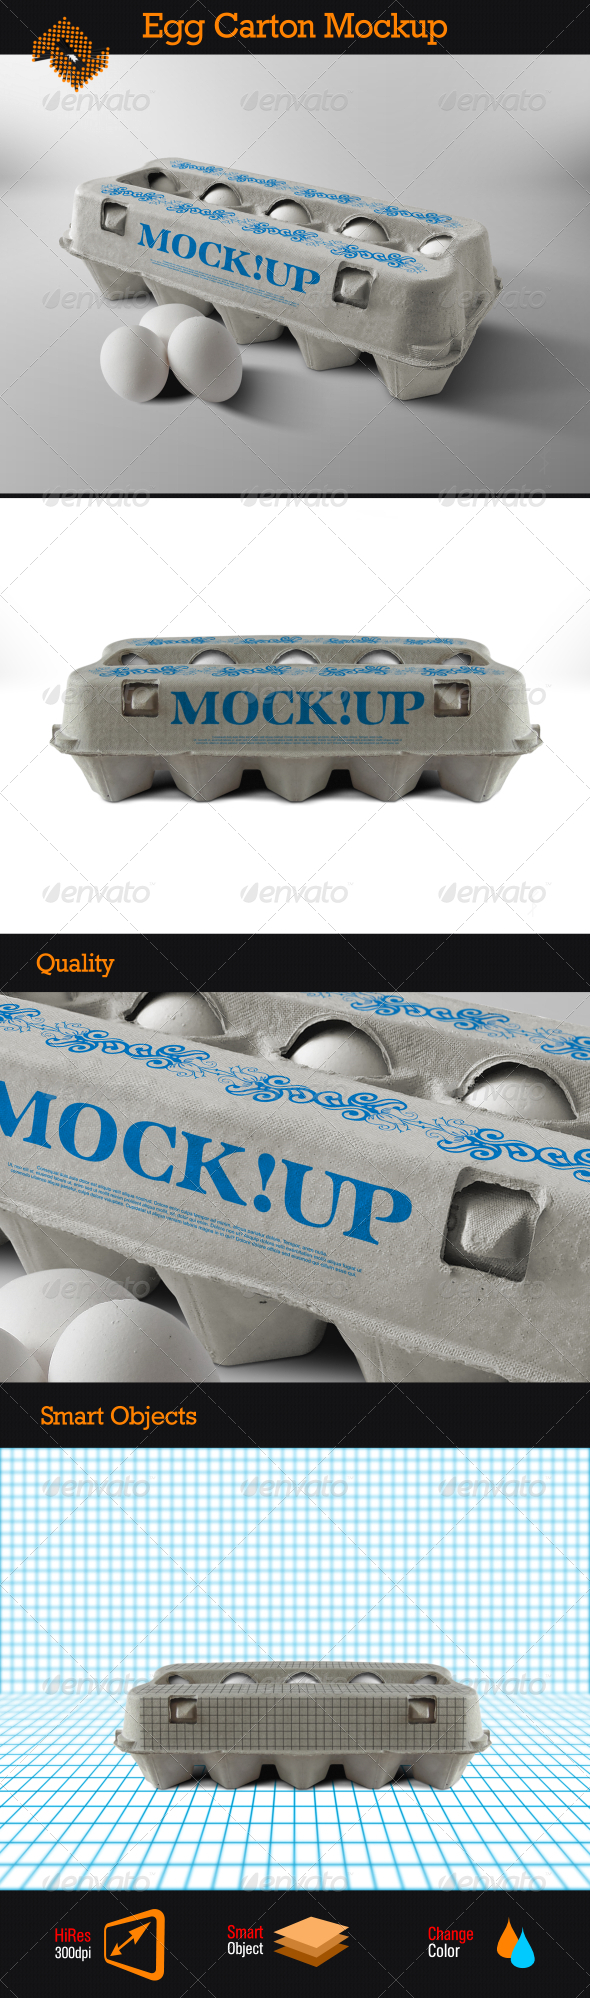 Download Egg Carton Mockup By Fusionhorn Graphicriver PSD Mockup Templates